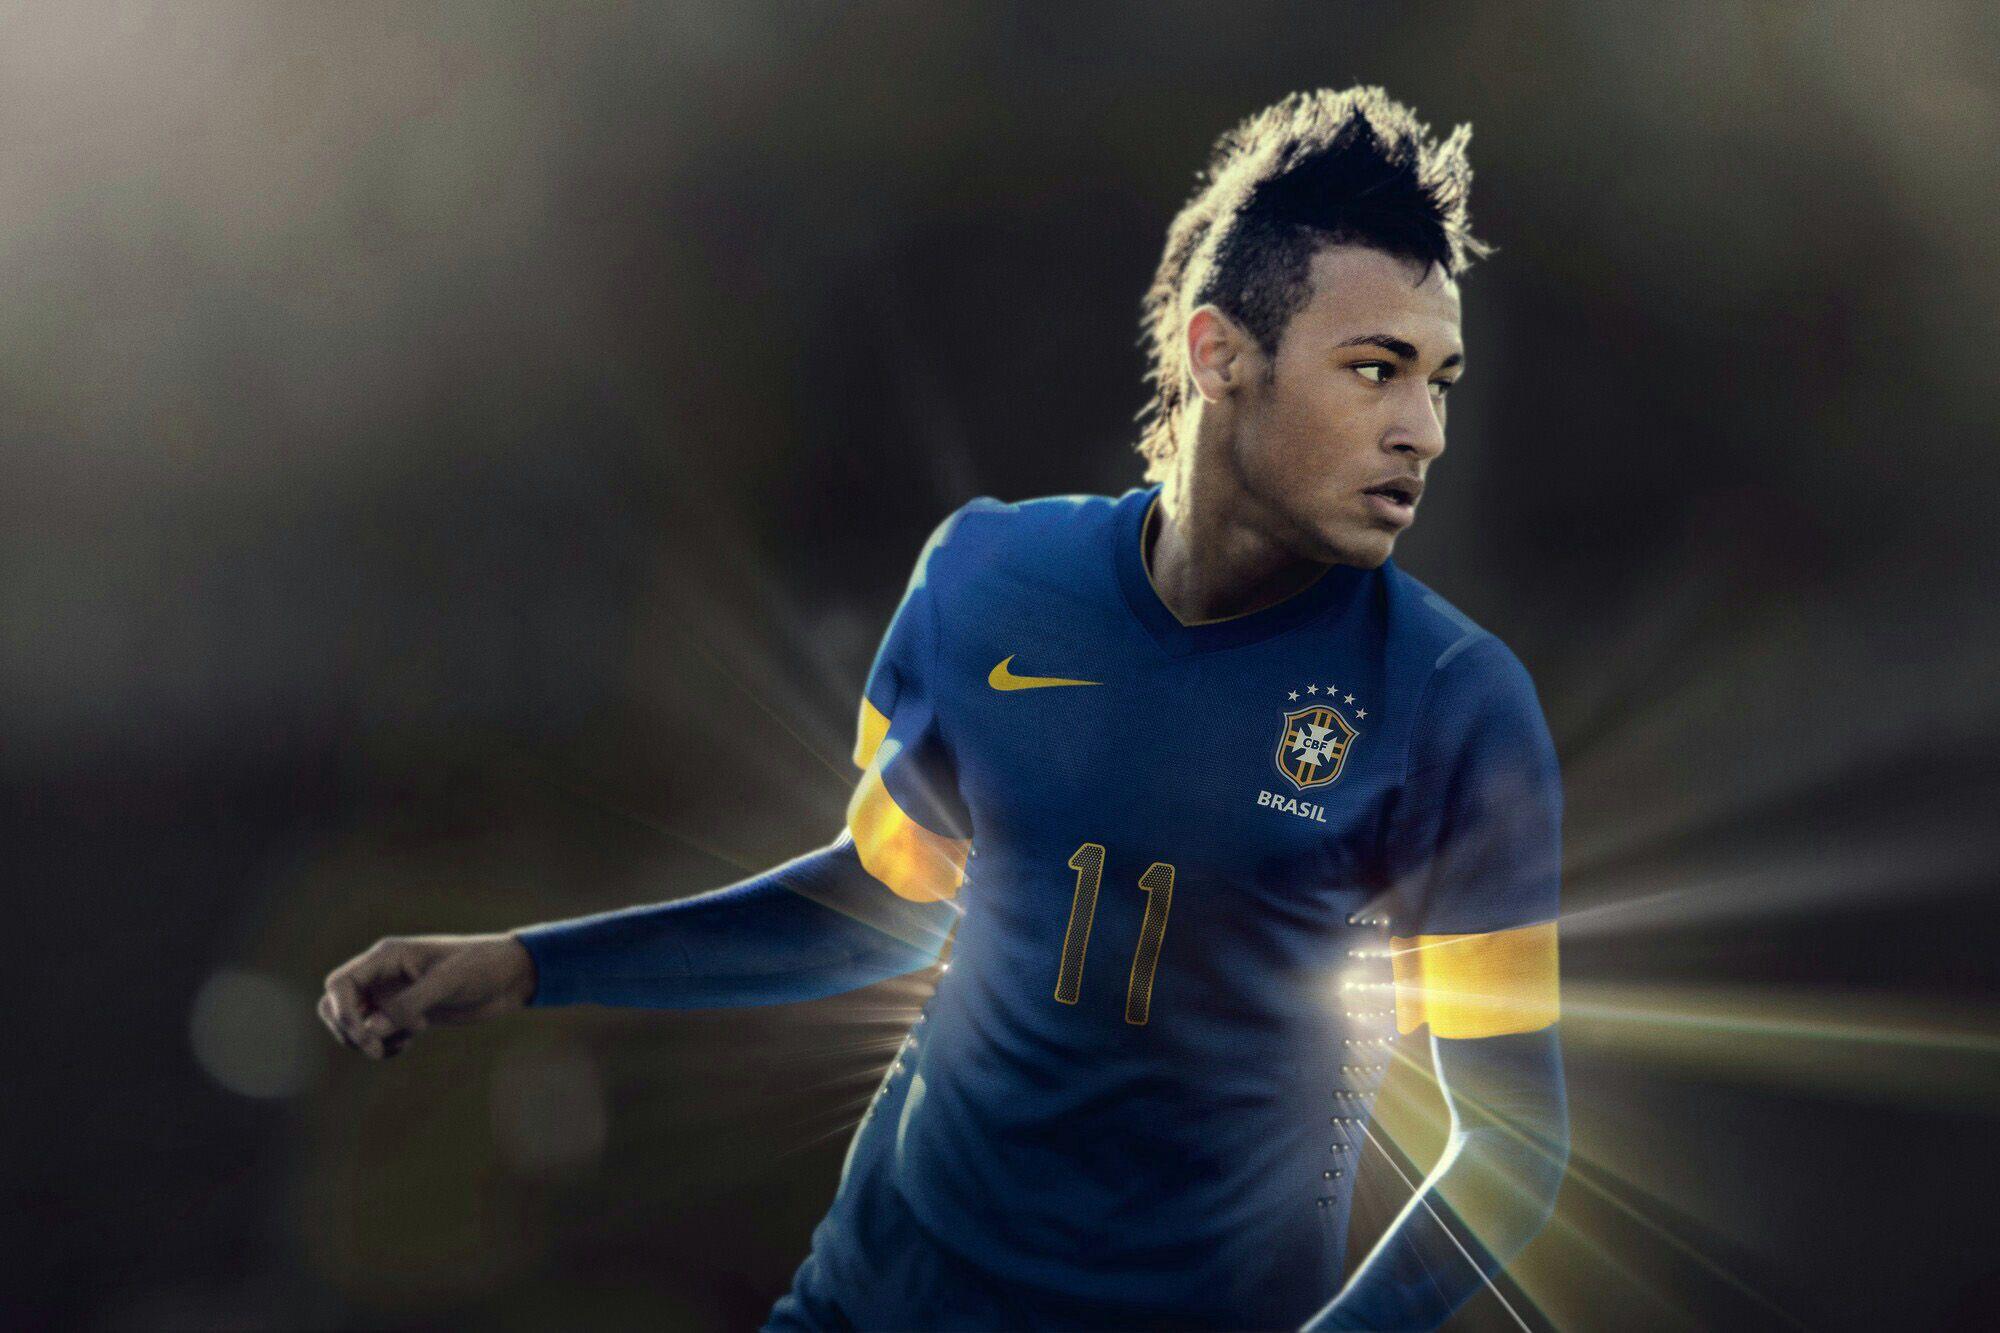 Neymar Hd Wallpapers Top Free Neymar Hd Backgrounds Wallpaperaccess ...